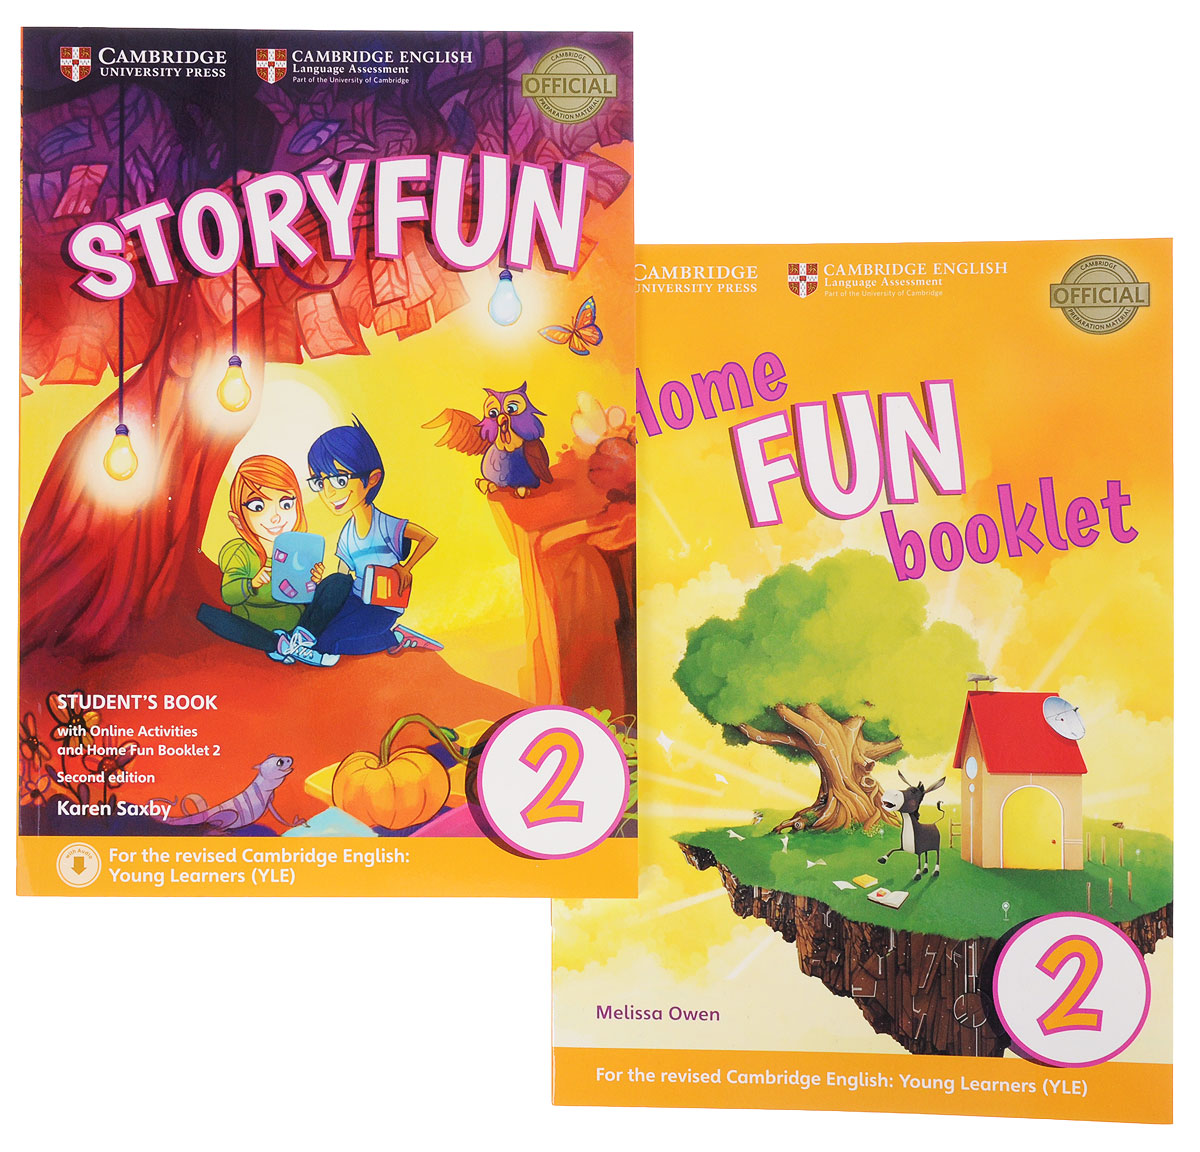 Home fun booklet. Storyfun 1. Storyfun Home fun booklet 1. Storyfun for Starters 2 издание. Storyfun 4.